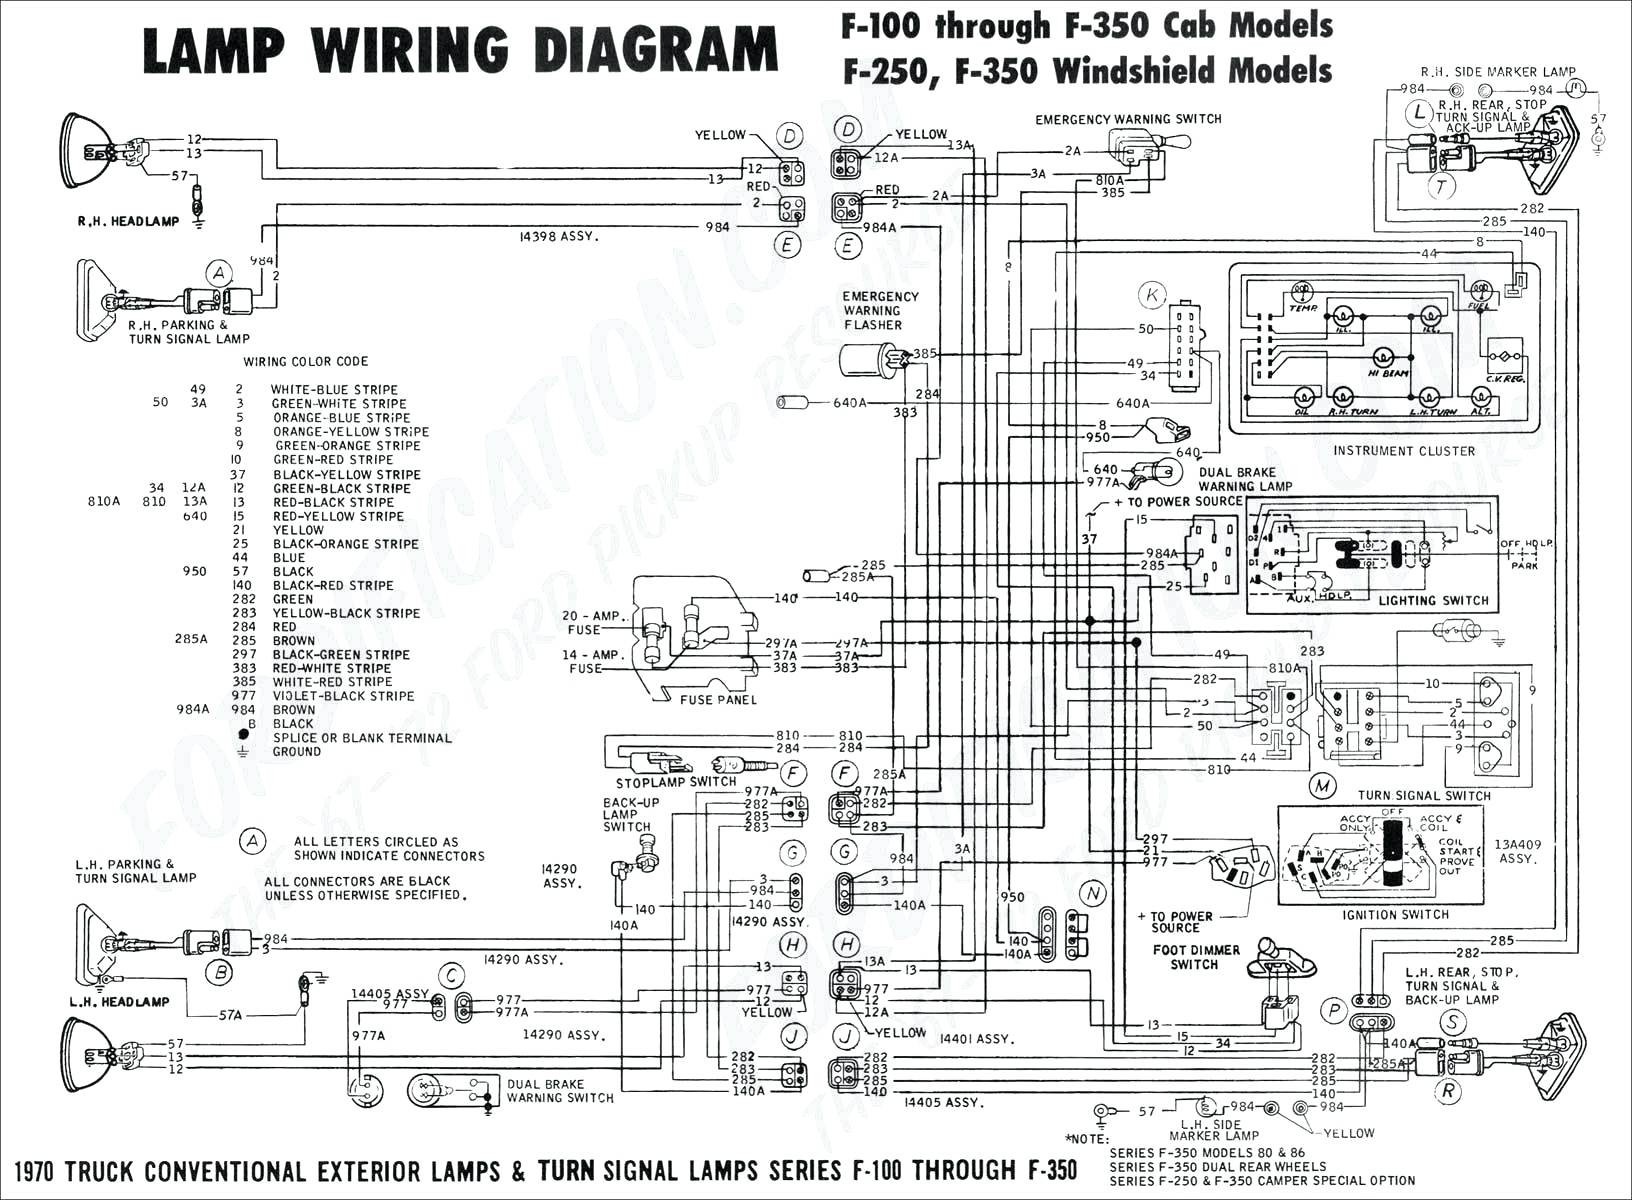 2000 Honda Accord V6 Engine Diagram 95 Honda Accord Engine Diagram Of 2000 Honda Accord V6 Engine Diagram